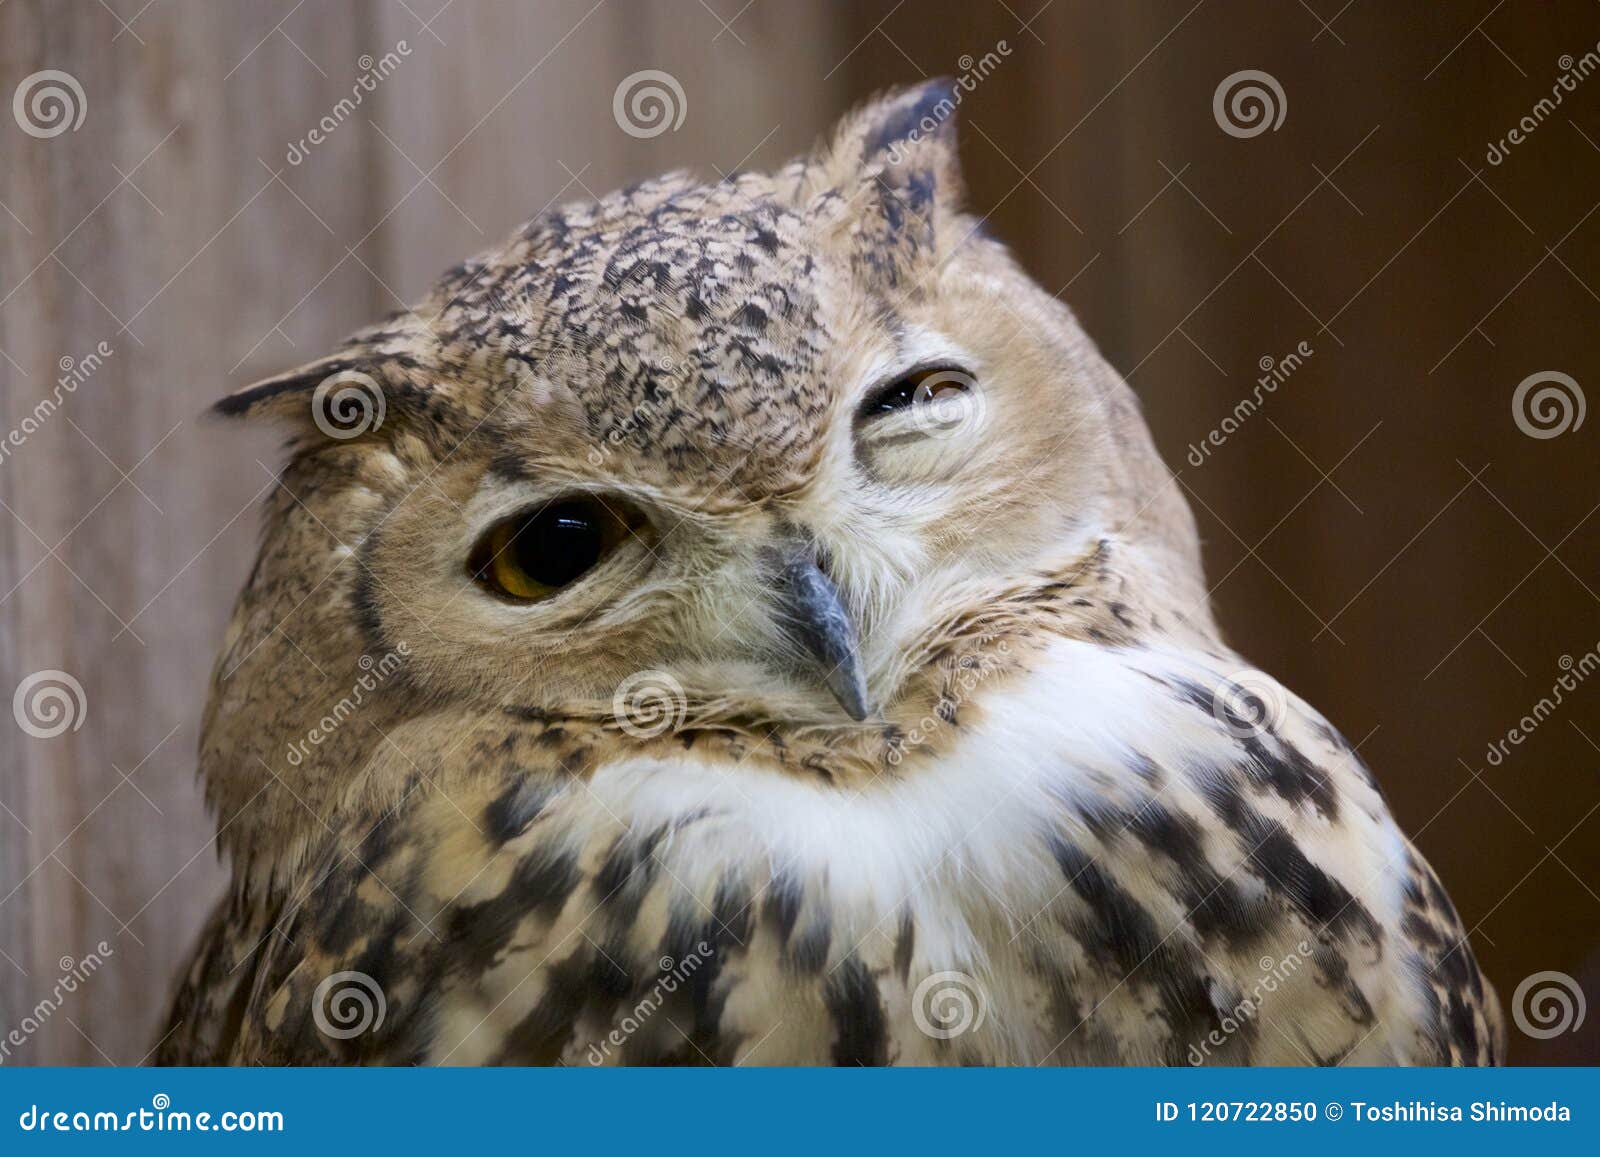 Pharaoh eagle owl face. stock photo. Image of feather - 120722850